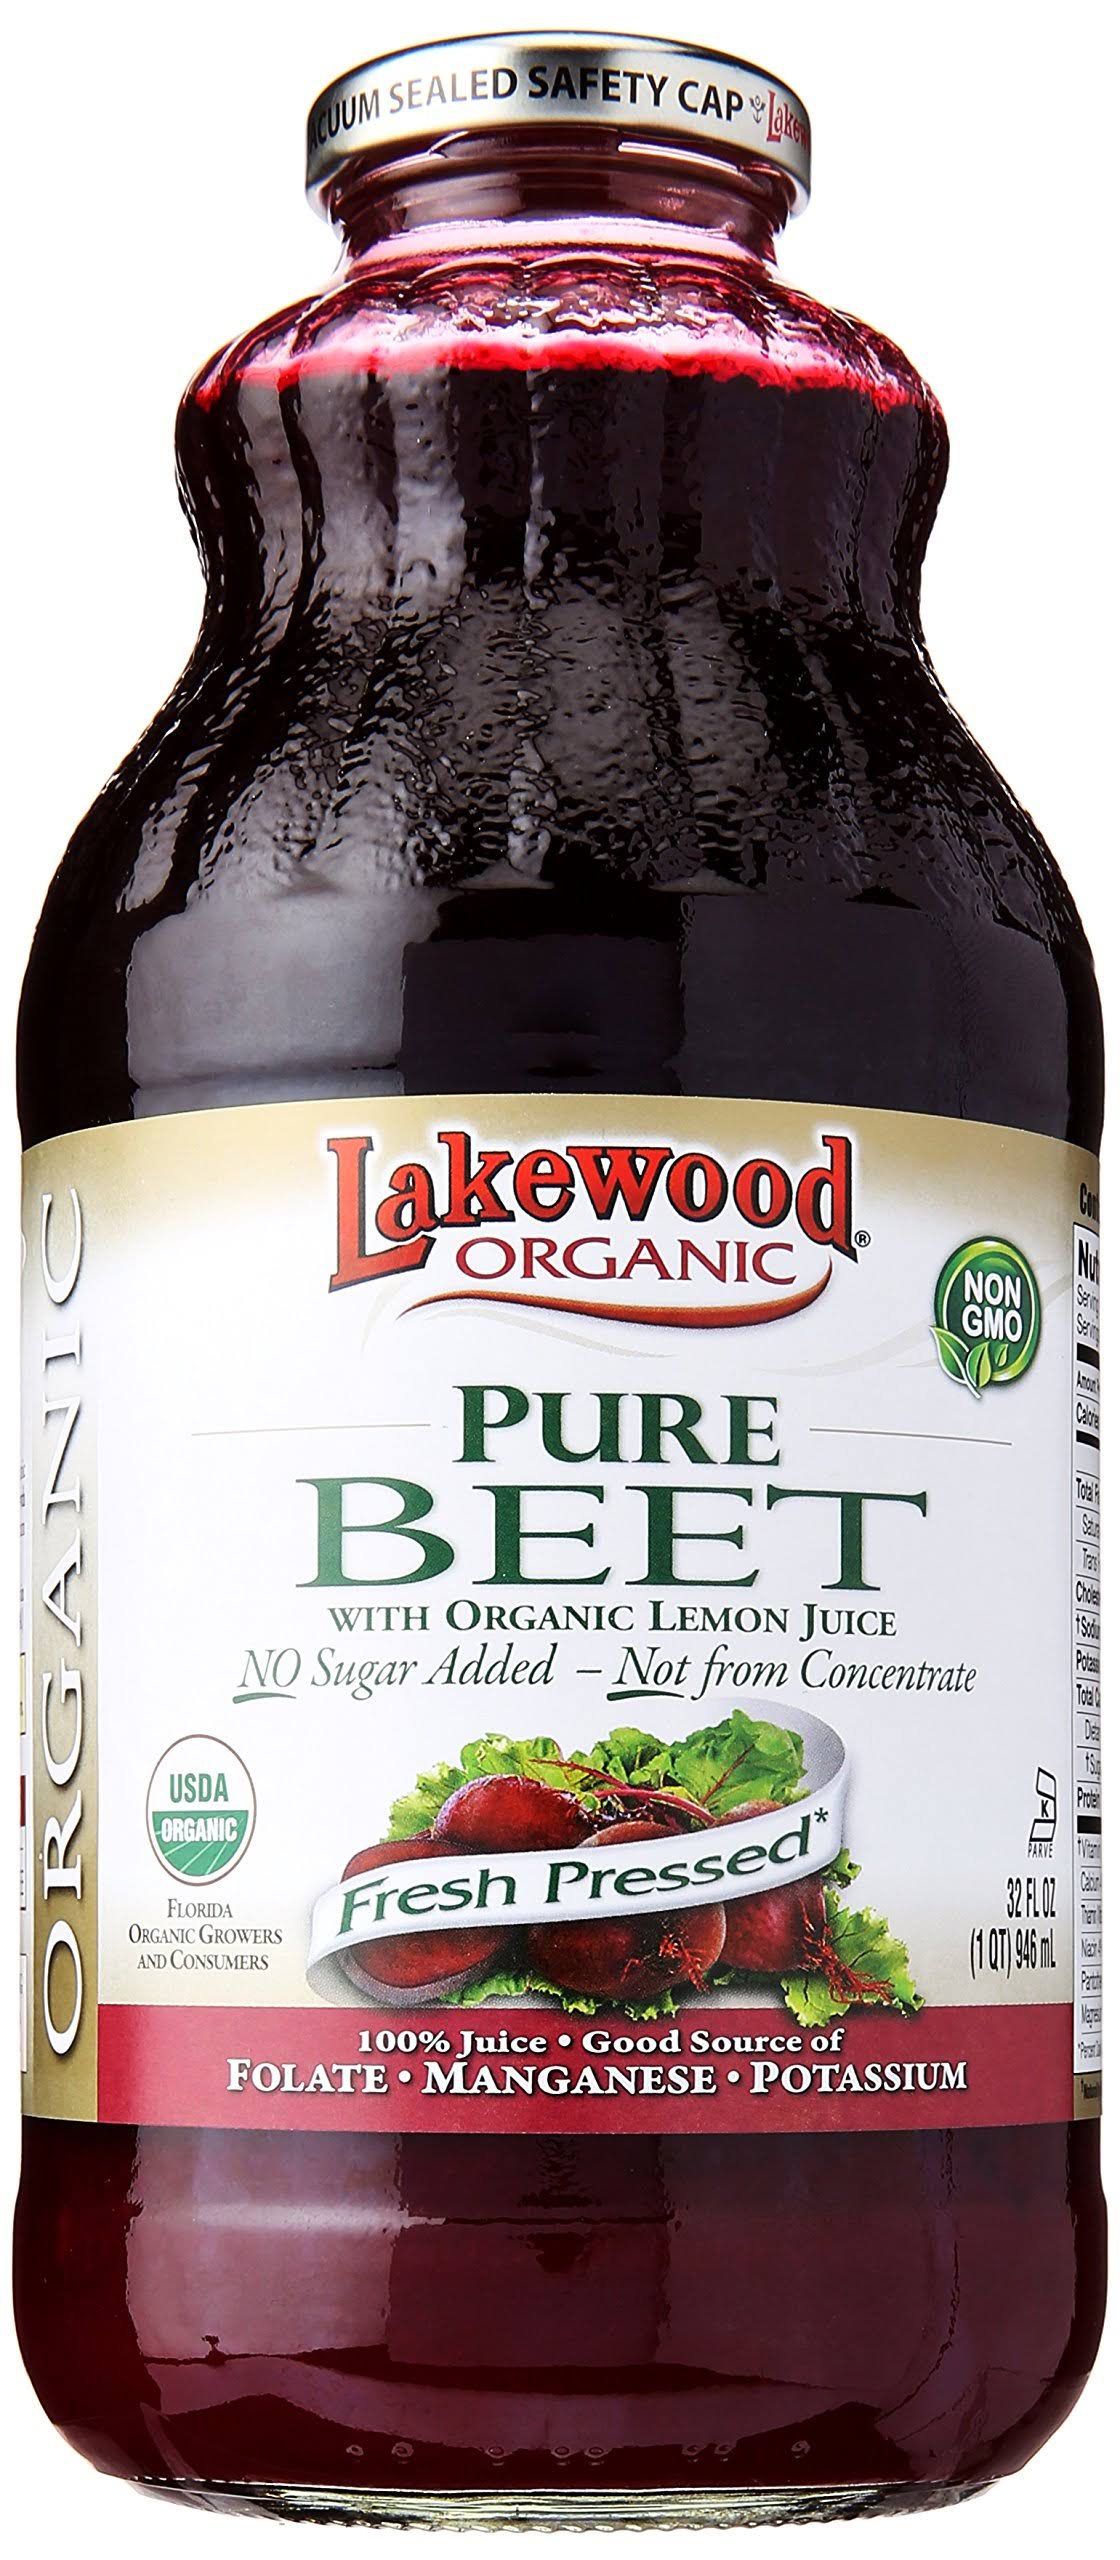 Lakewood Organic Super Beet Juice